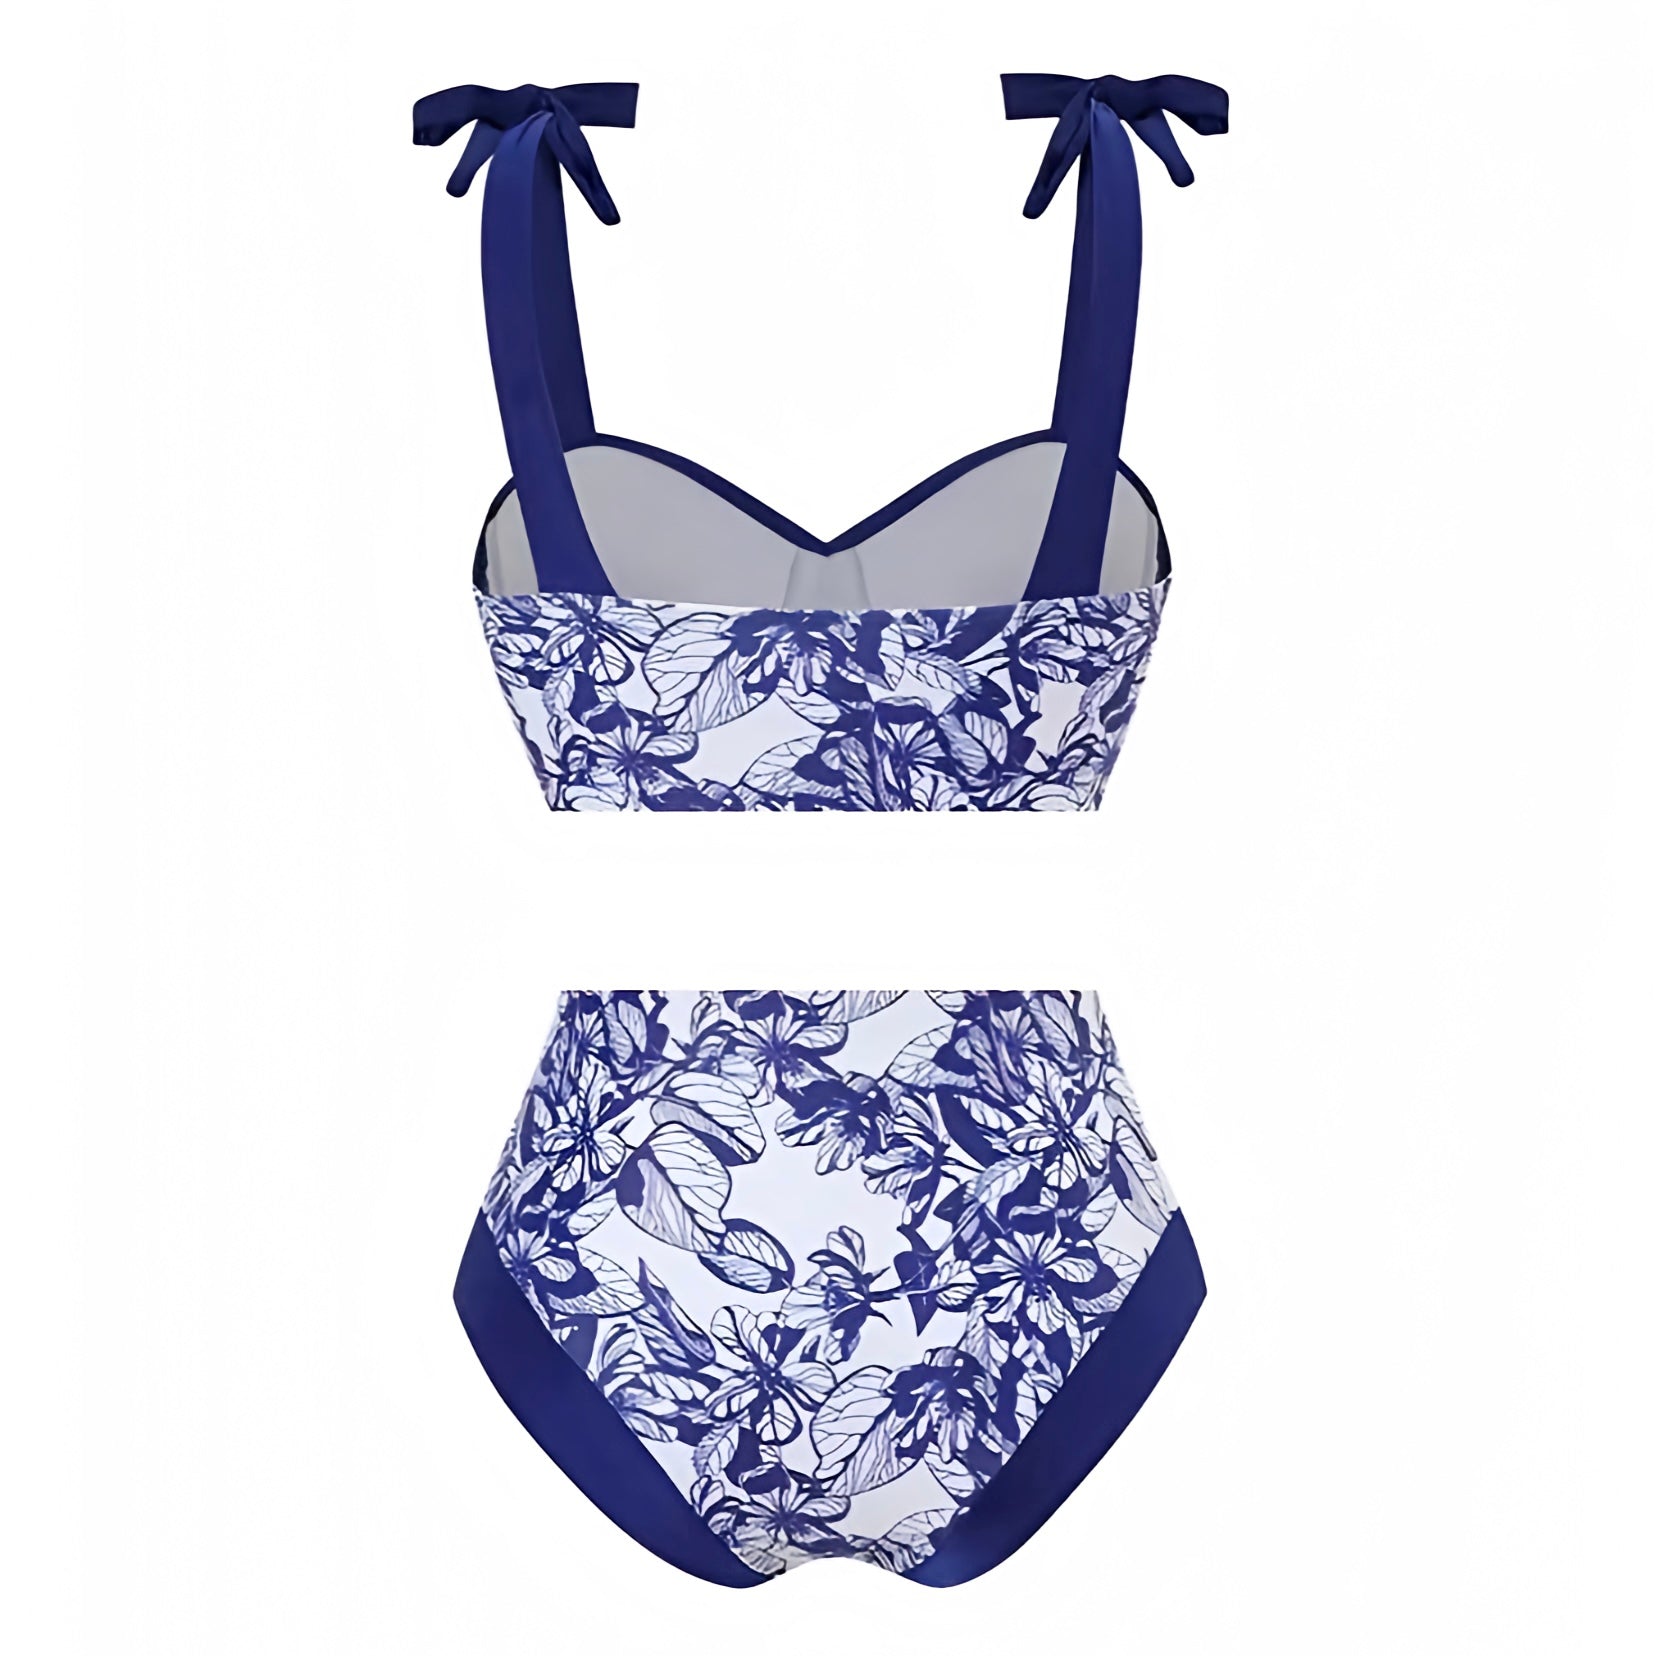 floral-print-navy-blue-white-flower-patterned-sweetheart-neckline-spaghetti-strap-sleeveless-backless-open-back-underwire-push-up-cheeky-thong-boho-bohemian-2-piece-bikini-set-swimsuit-swimwear-bathing-suit-women-ladies-teens-tweens-chic-trendy-spring-2024-summer-elegant-classic-classy-feminine-preppy-style-european-greece-vacation-coastal-granddaughter-grandmillennnial-beach-wear-revolve-altard-state-frankies-bikinis-blackbough-fillyboo-dupe